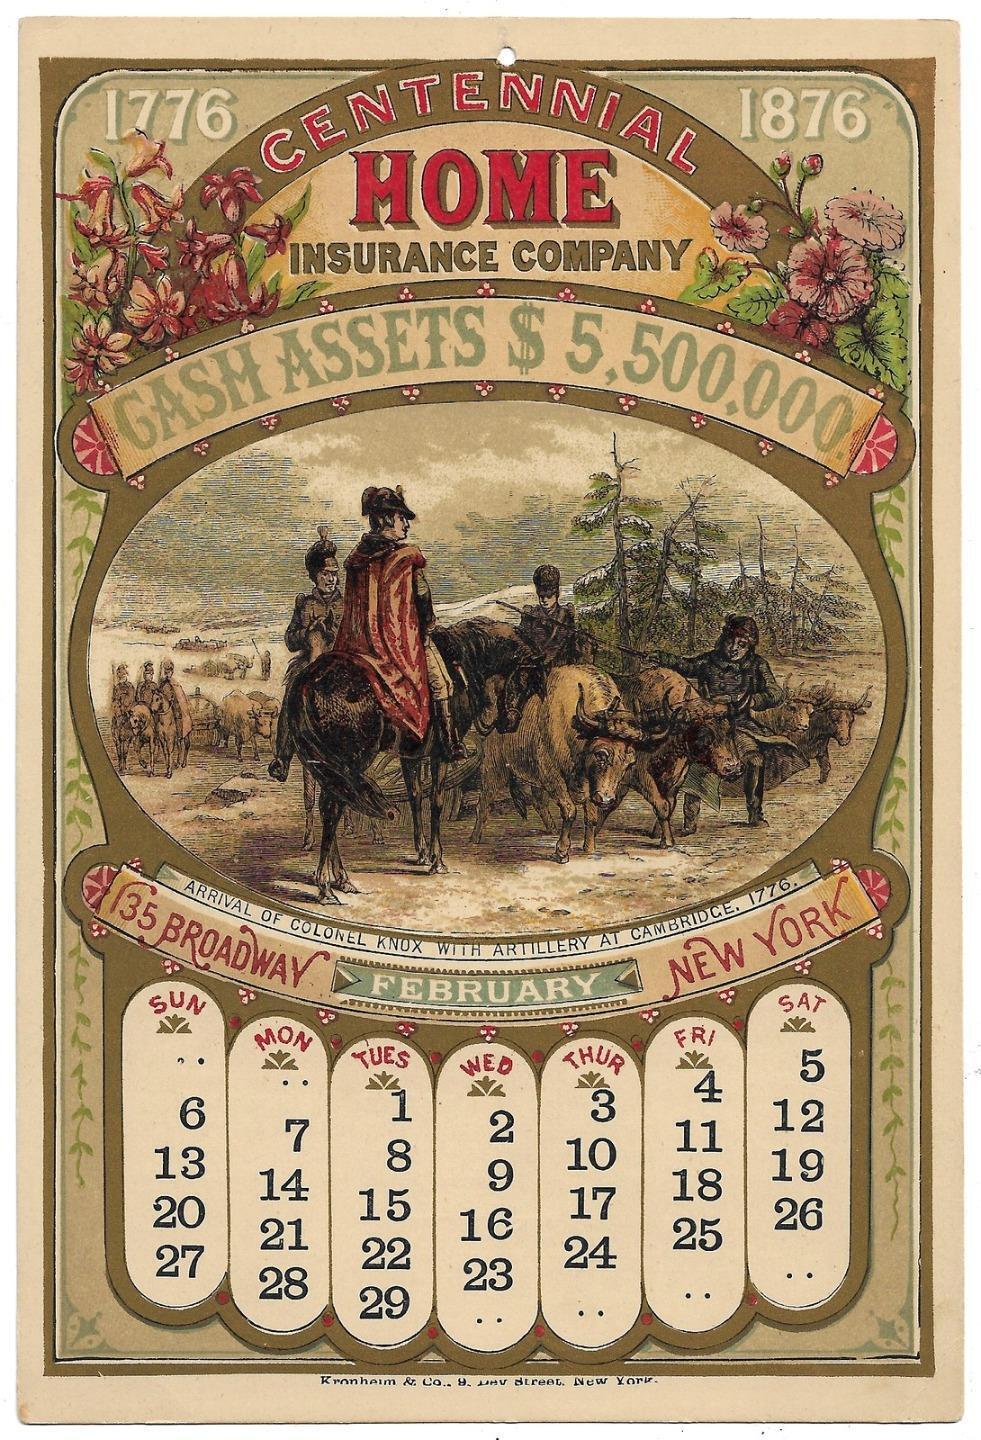 Original 1876 Centennial Expo February Calendar  Colonel Knox at Cambridge